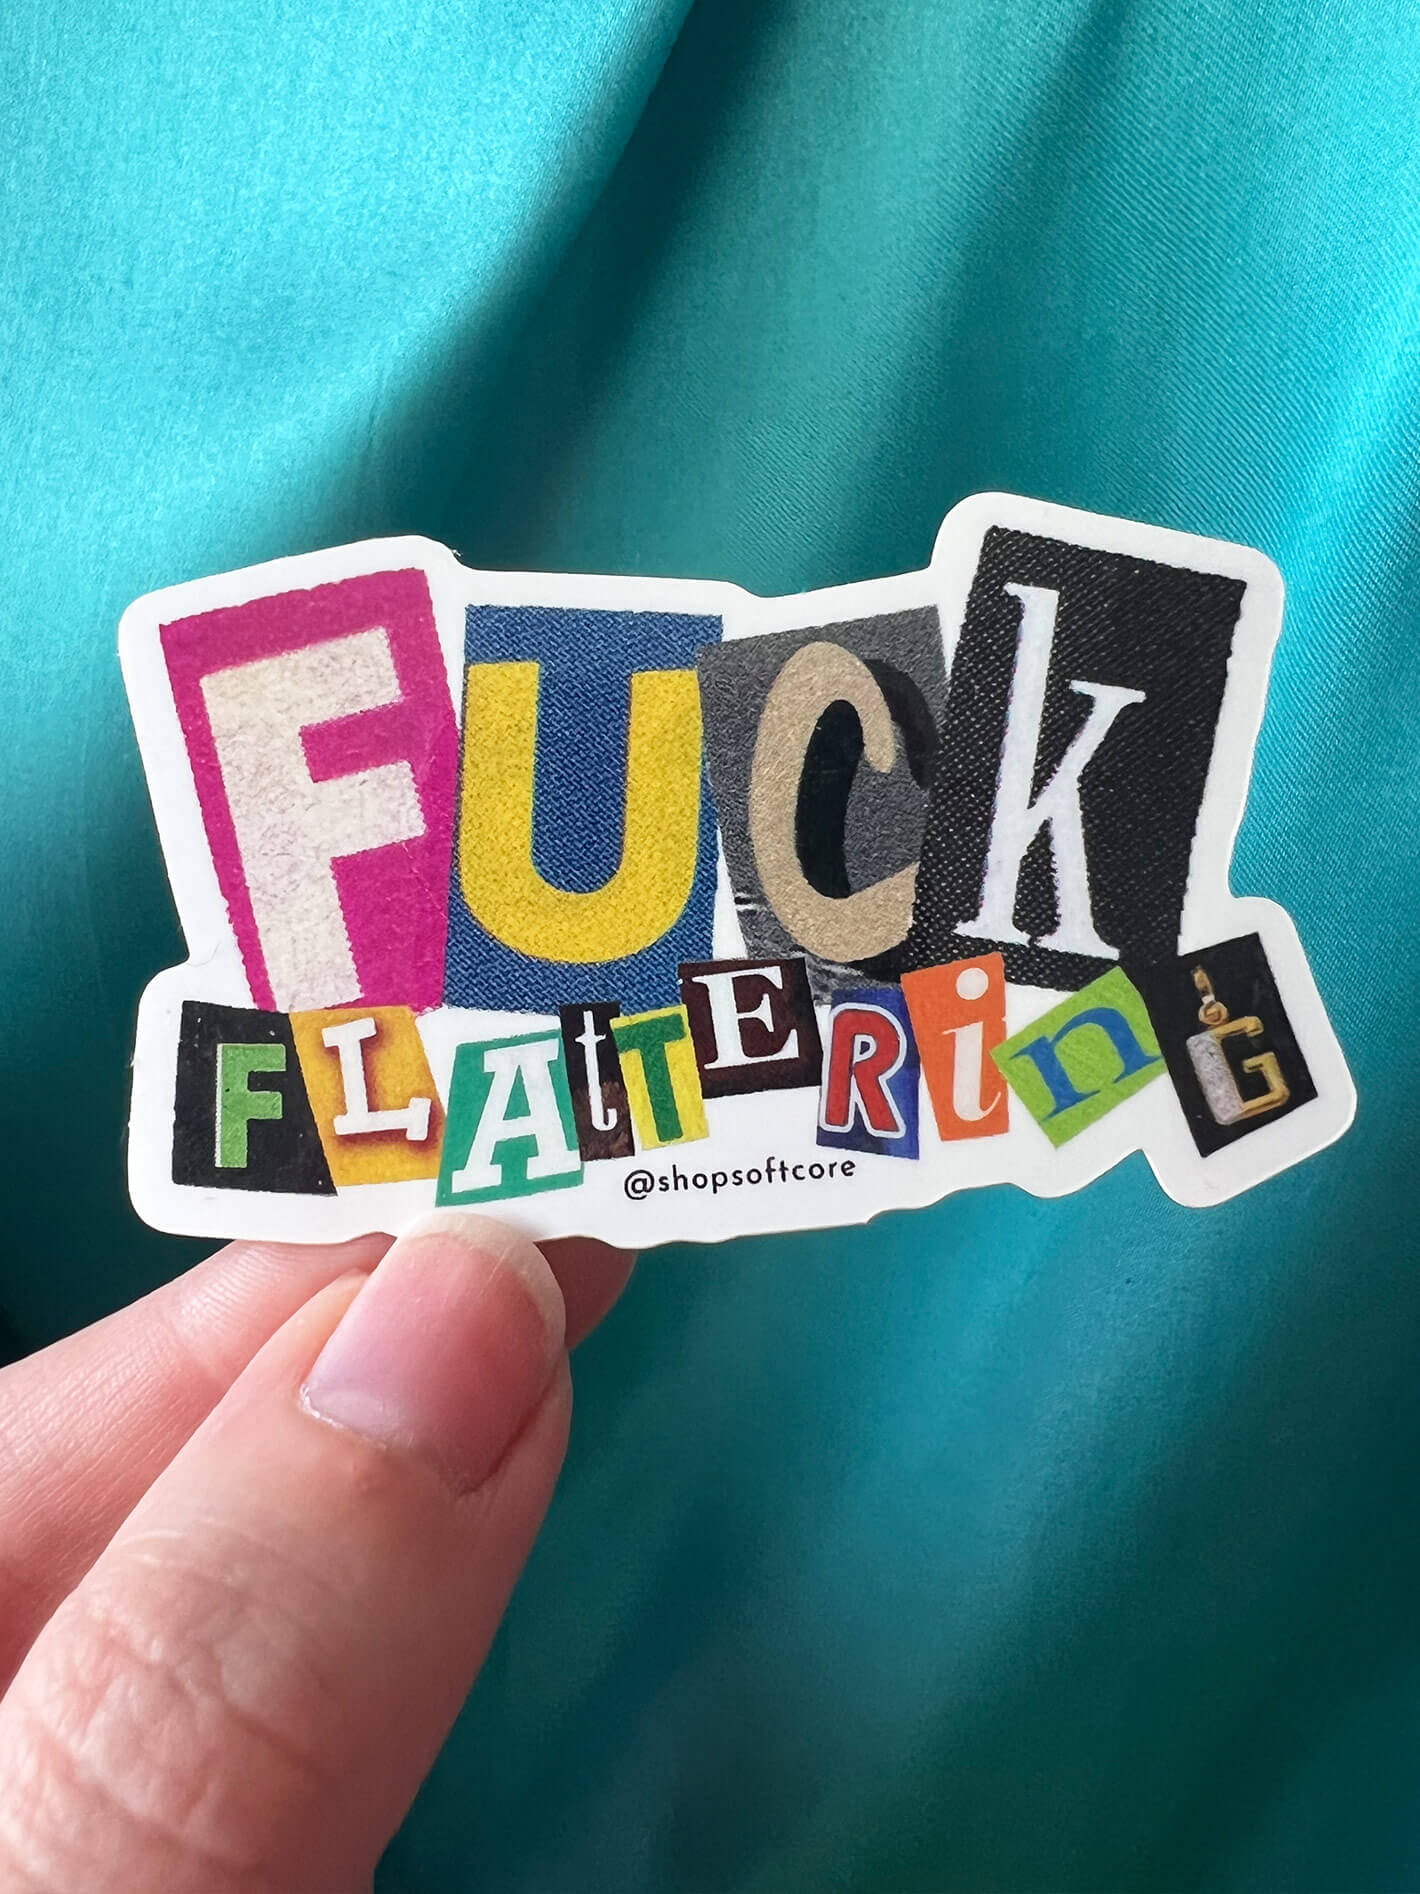 Punk body positive fuck flattering sticker.